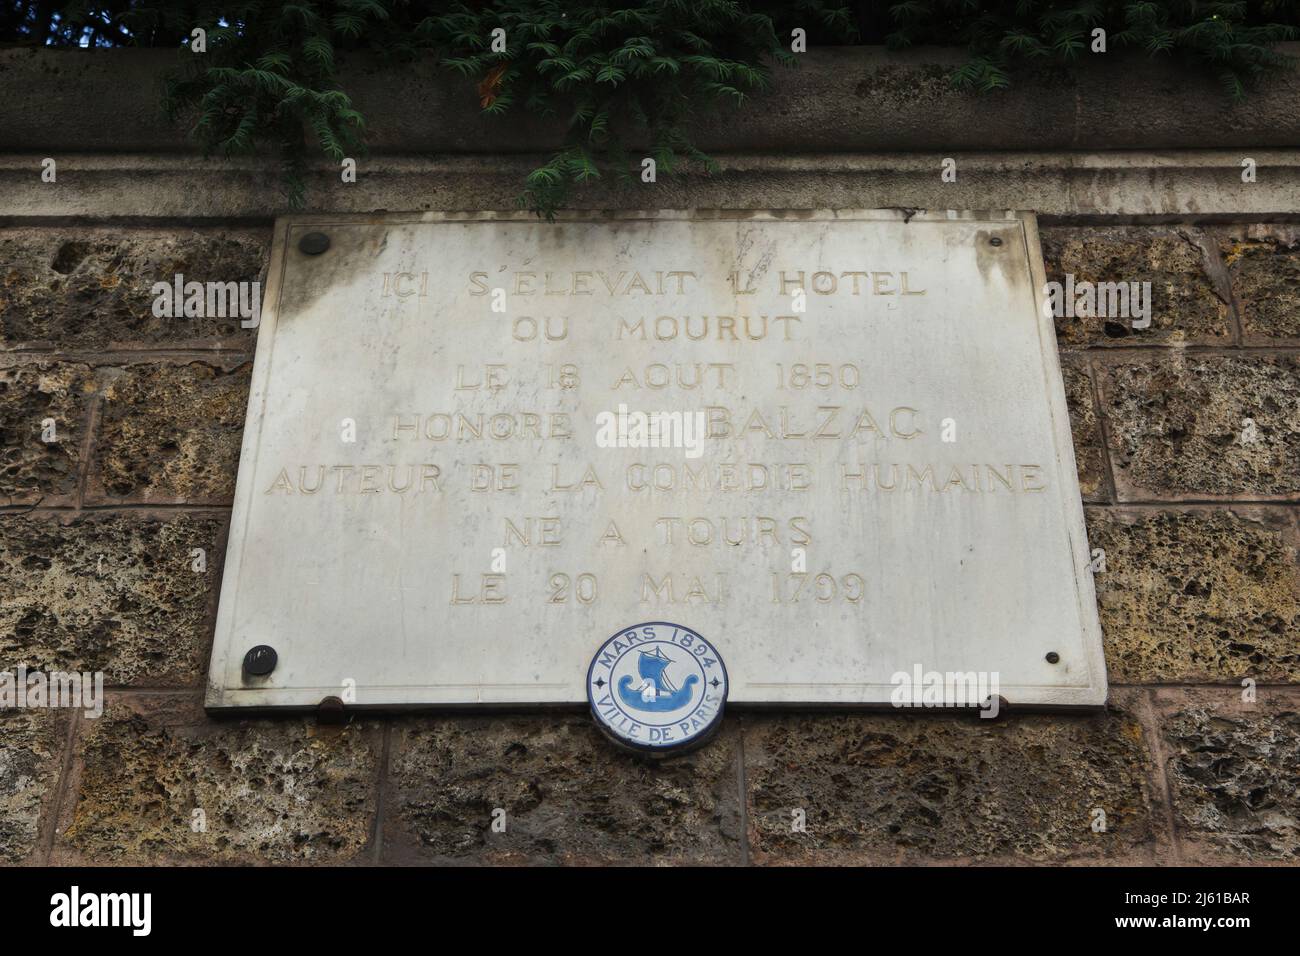 Targa commemorativa dedicata al romanziere francese Honoré de Balzac sul Hôtel Salomon de Rothschild a Parigi, Francia. Honoré de Balzac morì in questo luogo il 18 agosto 1850. Foto Stock